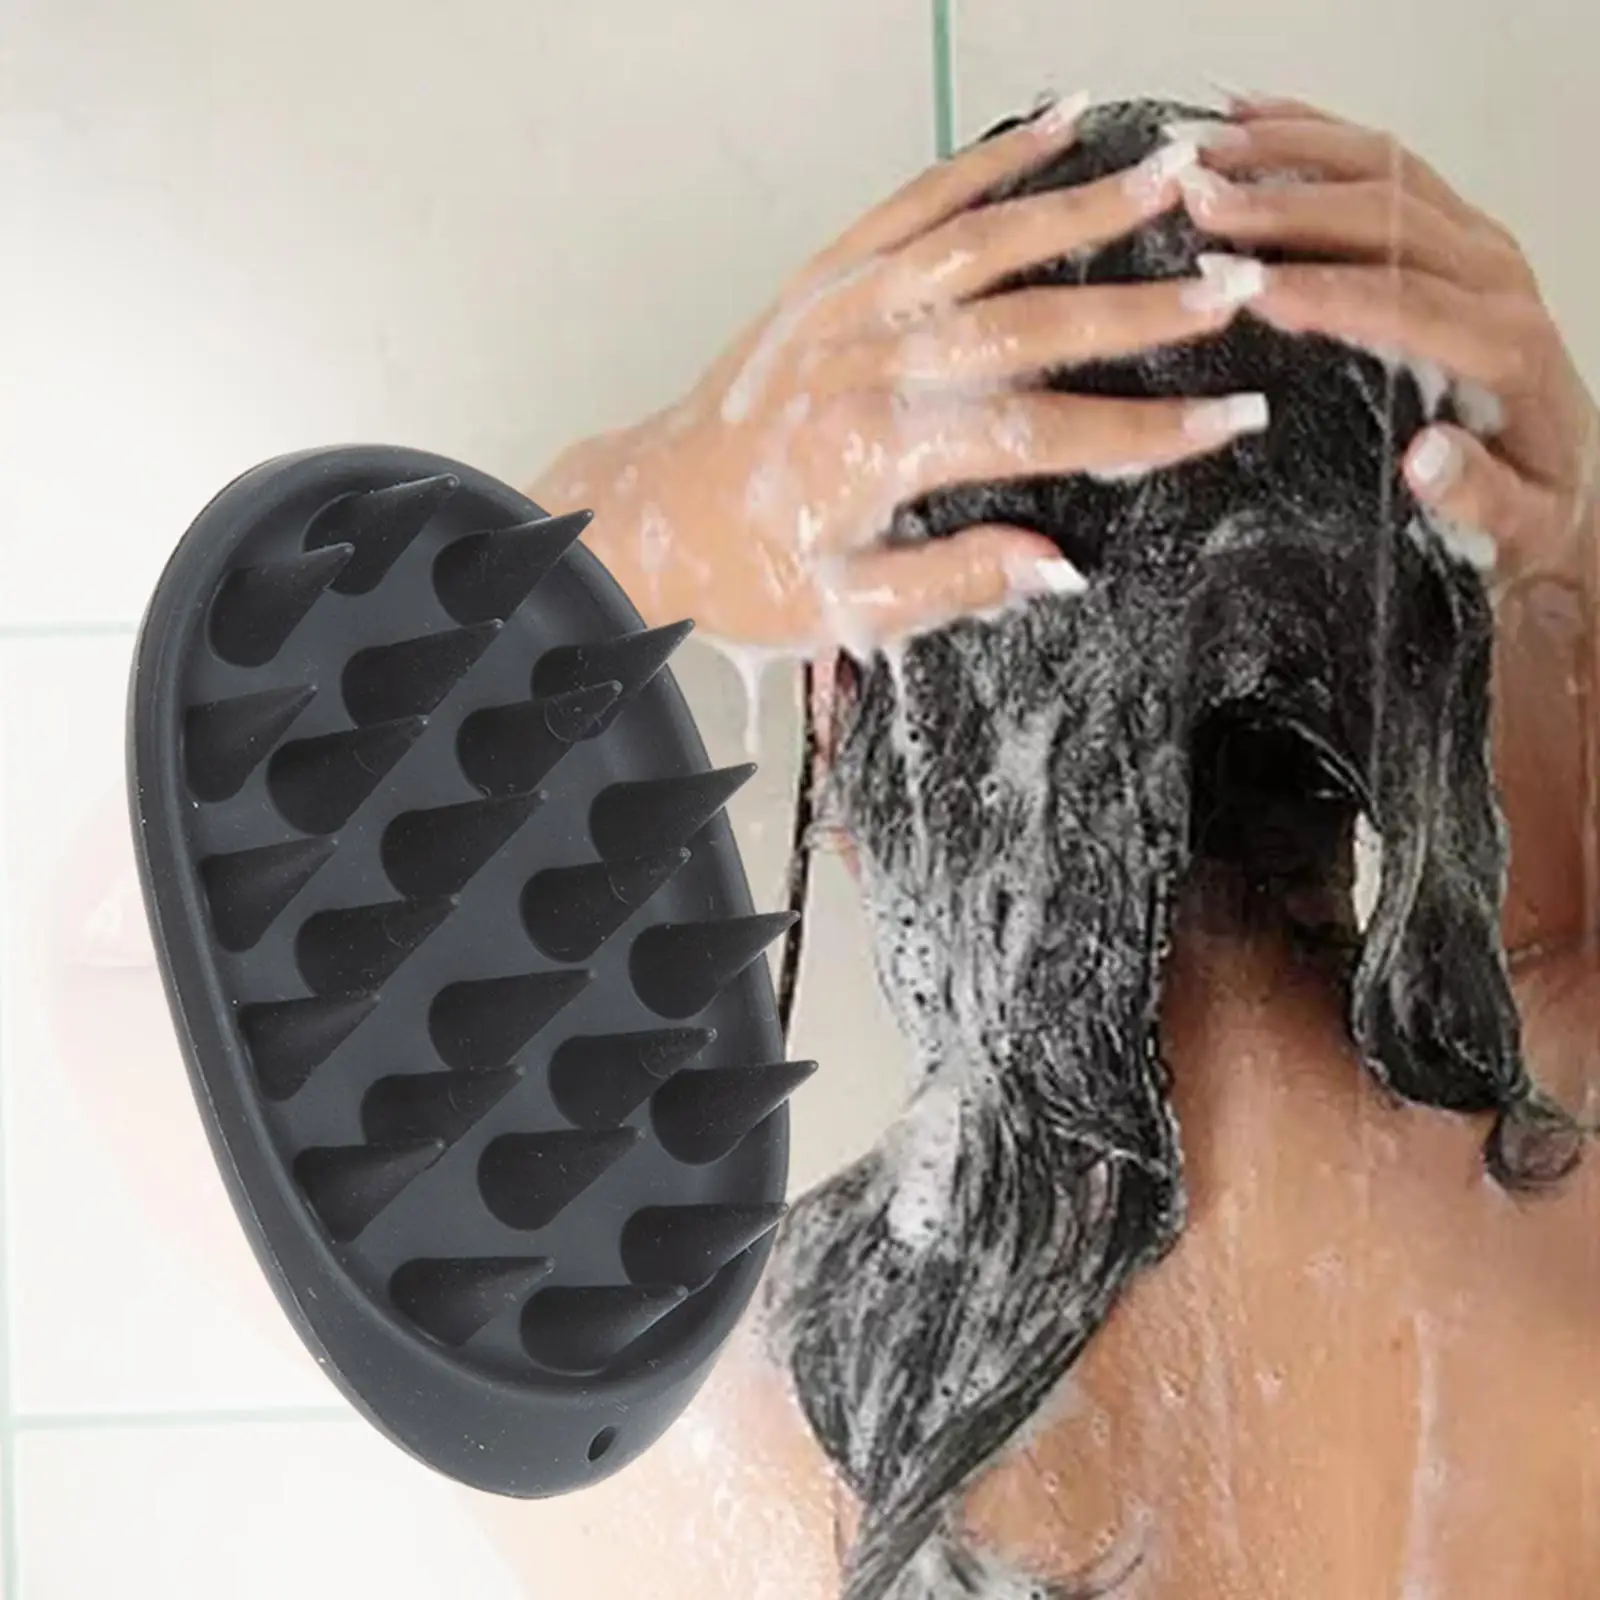 2X sikat sampo penggosok rambut untuk pria wanita tebal keriting basah dan kering rambut Hotel